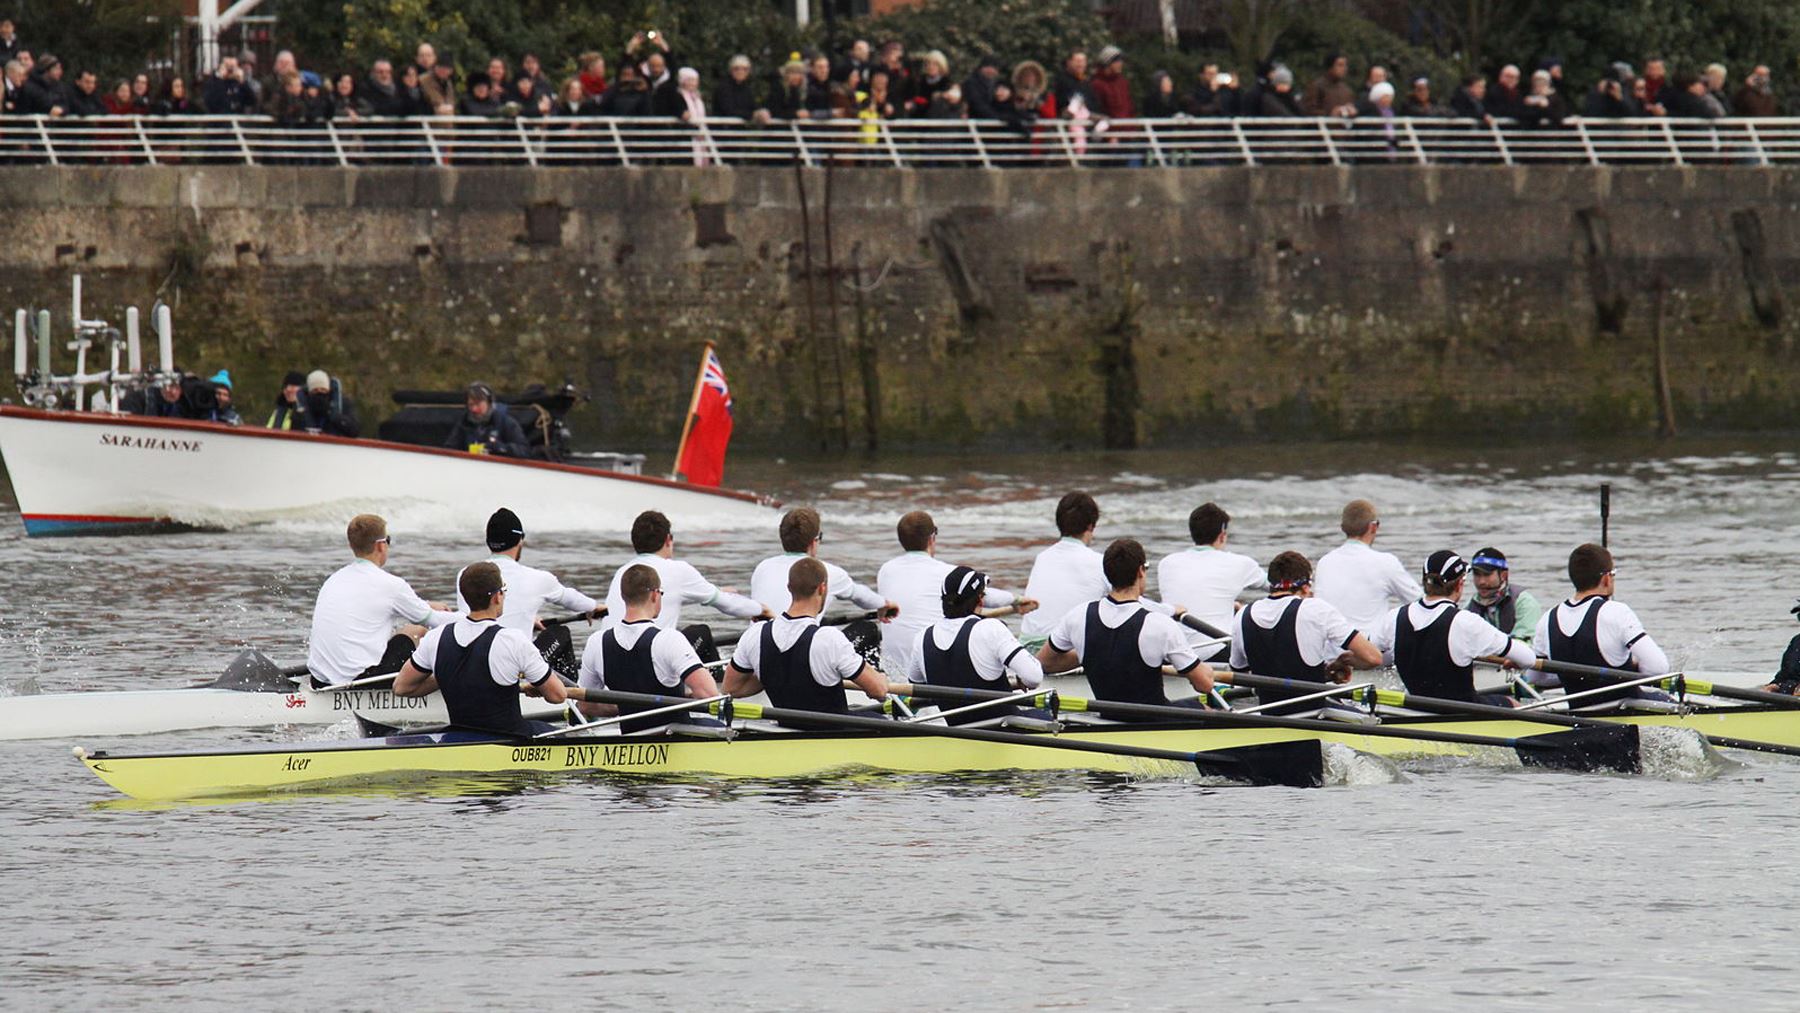 Oxford-Cambridge Boat Race